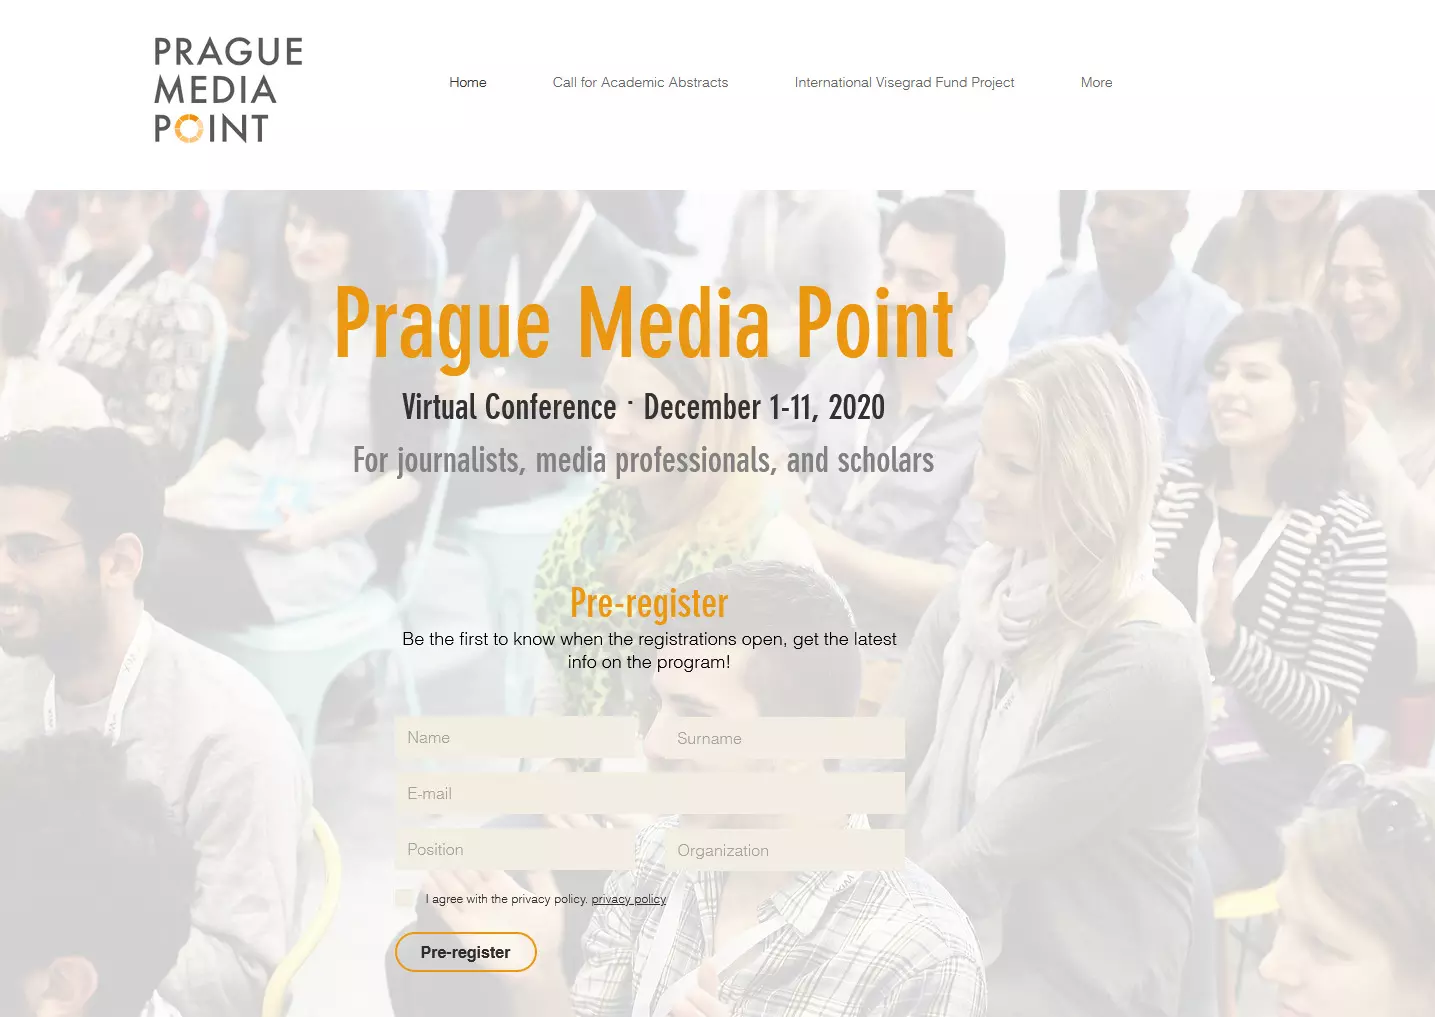 PRAGUE MEDIA POINT, December 1-11, 2020, VIRTUAL CONFERENCE  www.praguemediapoint.com